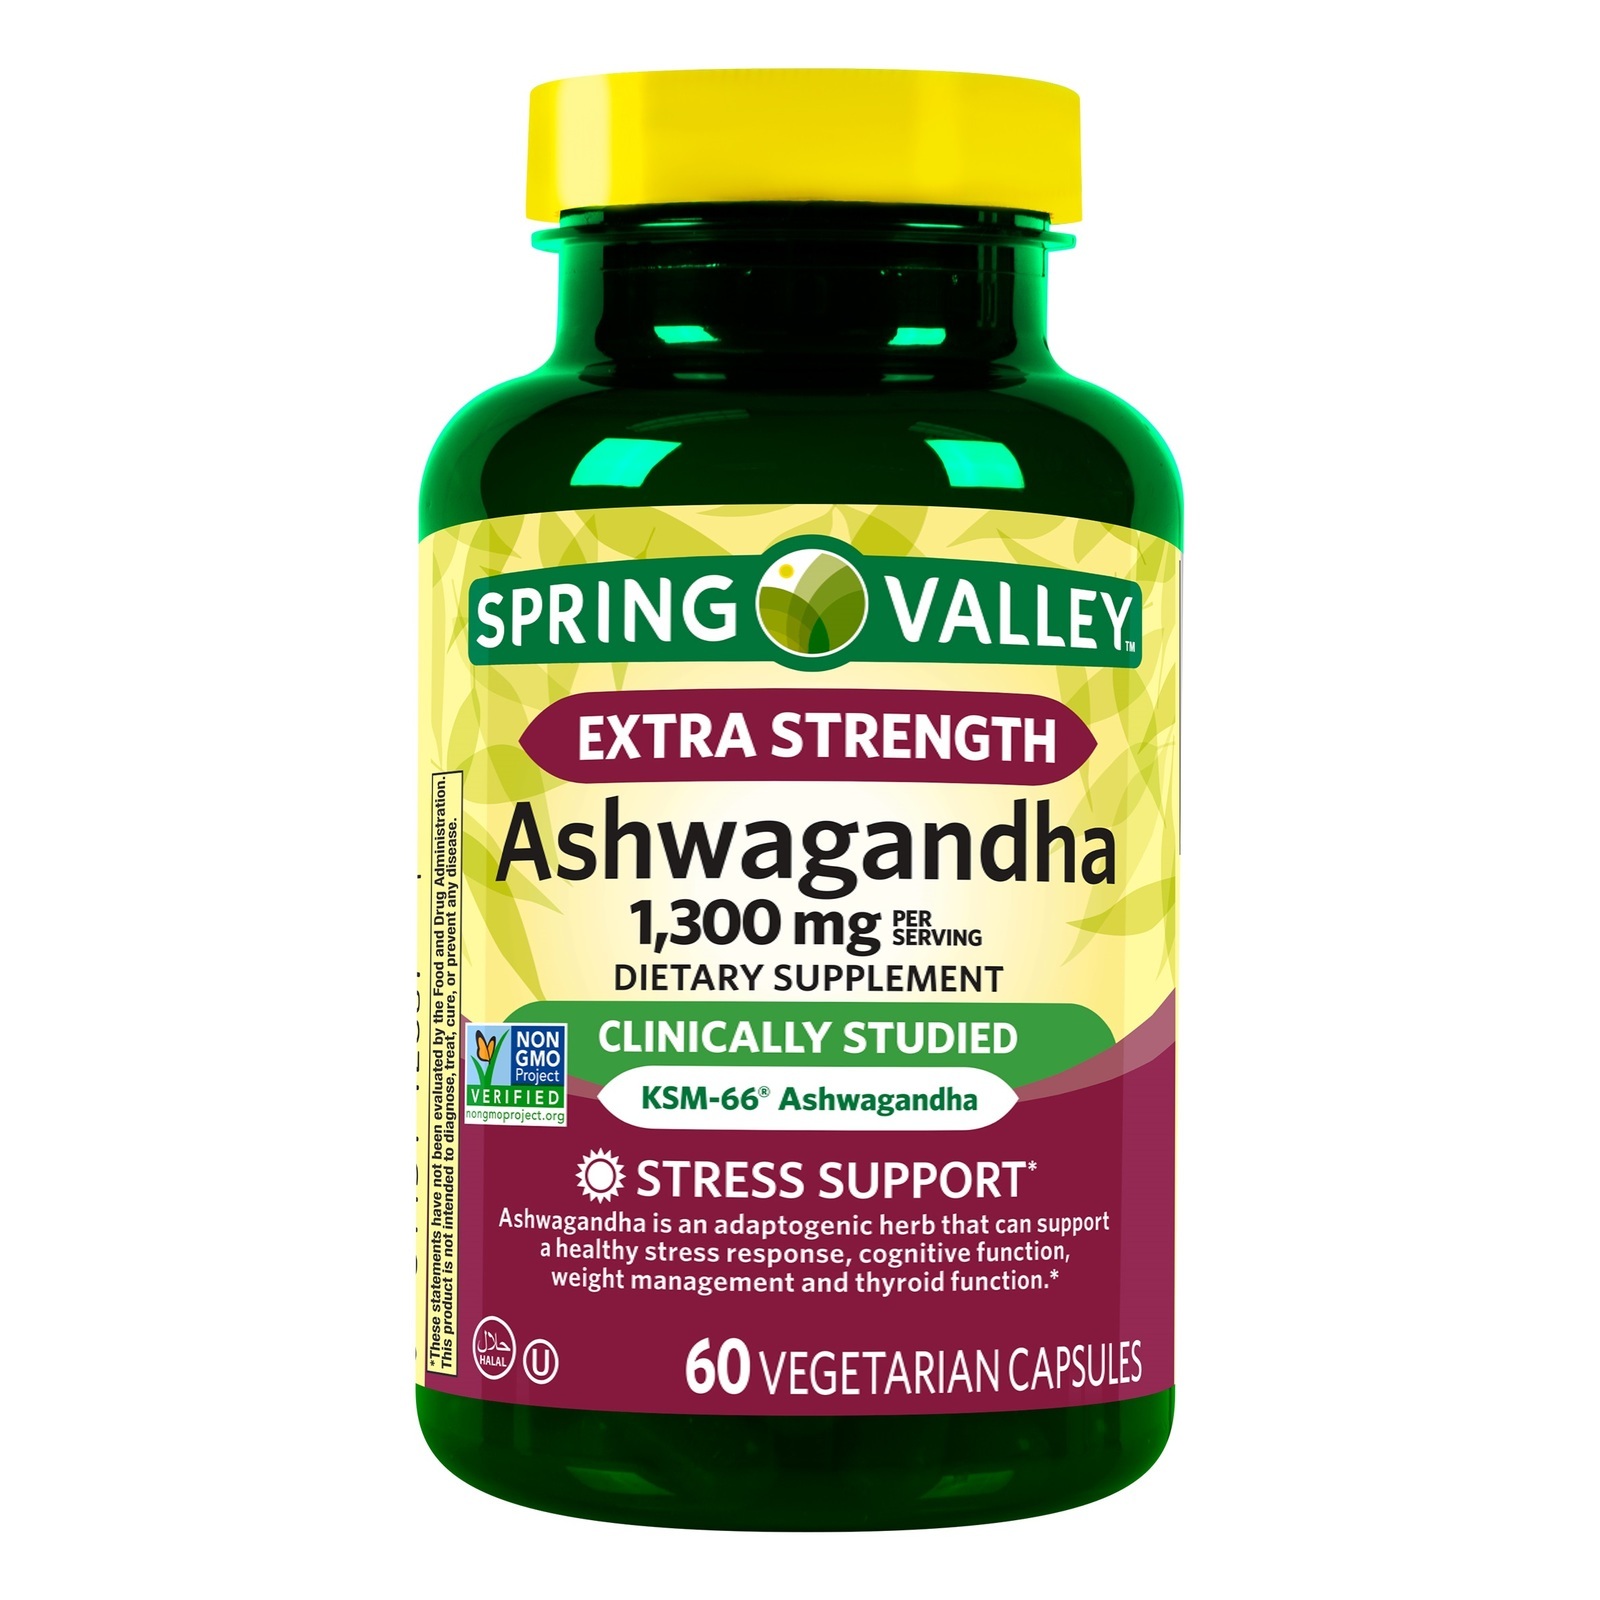 Spring Valley Extra Strength Ashwagandha, 1300 mg, 60 Vegetarian Capsules - $26.89